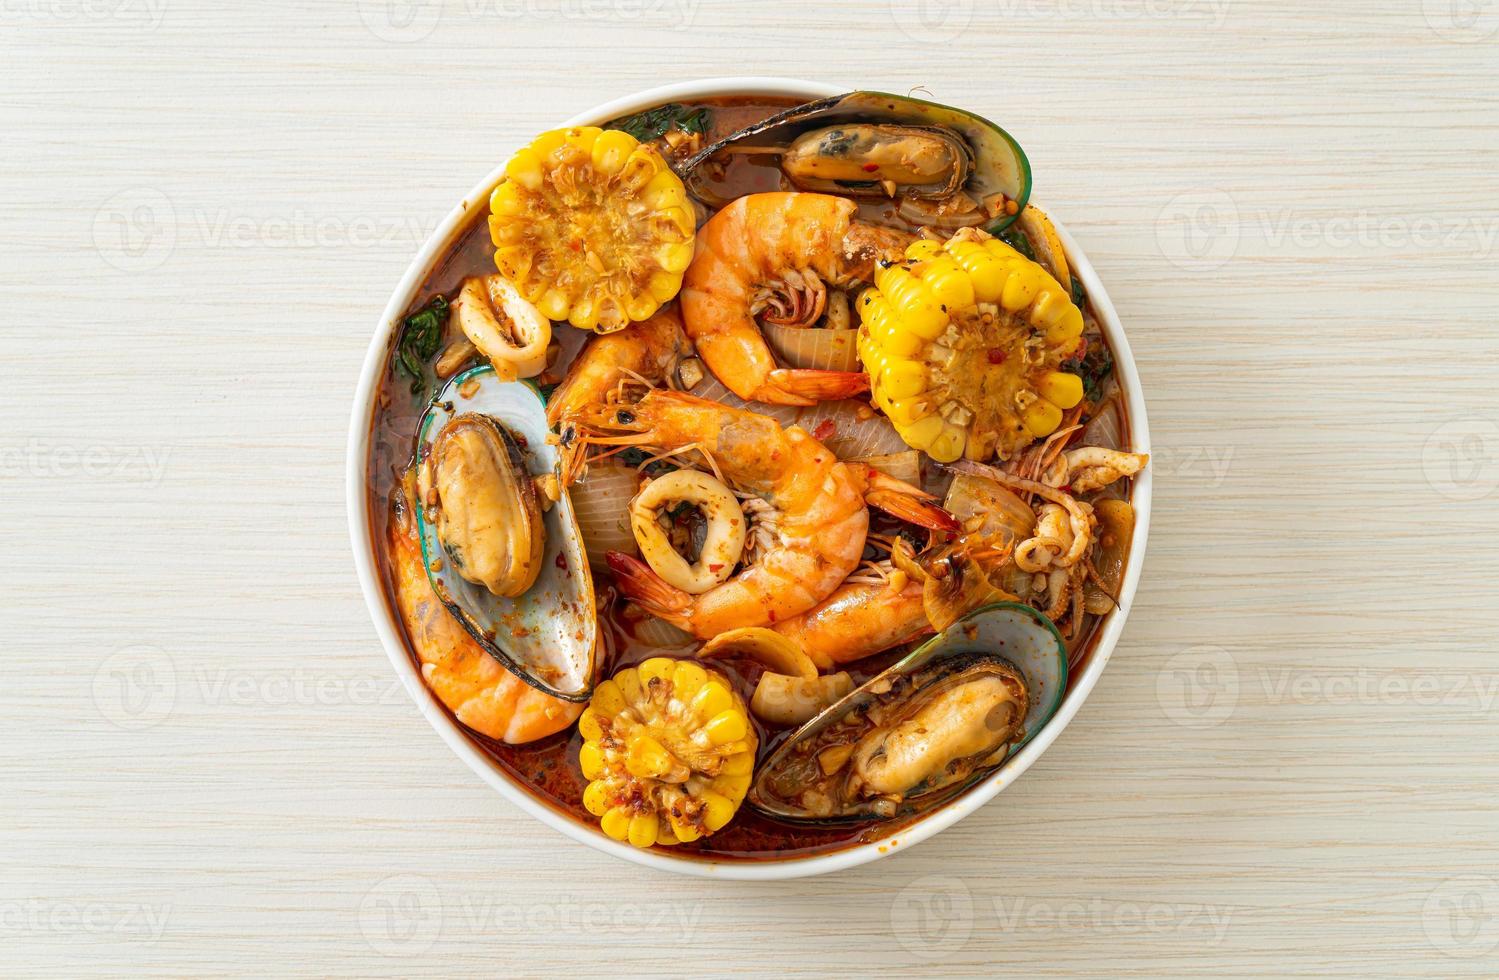 kryddig grillad skaldjur - räkor, sqiud, mussla foto